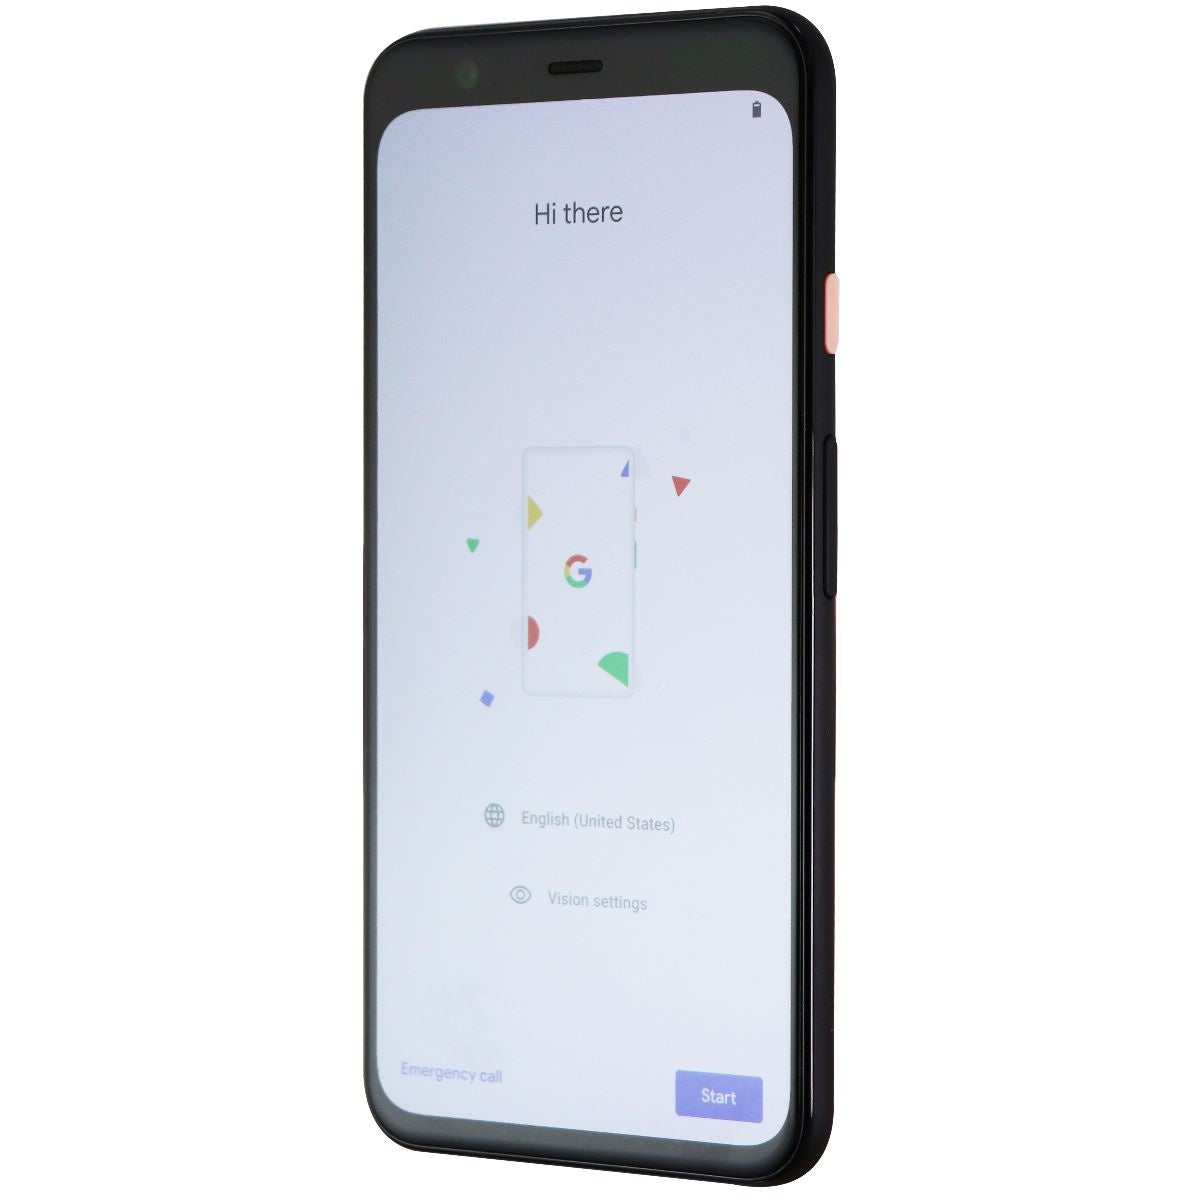 Google Pixel 4 Smartphone (G020I) Verizon ONLY - 64GB / Oh So Orange Cell Phones & Smartphones Google    - Simple Cell Bulk Wholesale Pricing - USA Seller